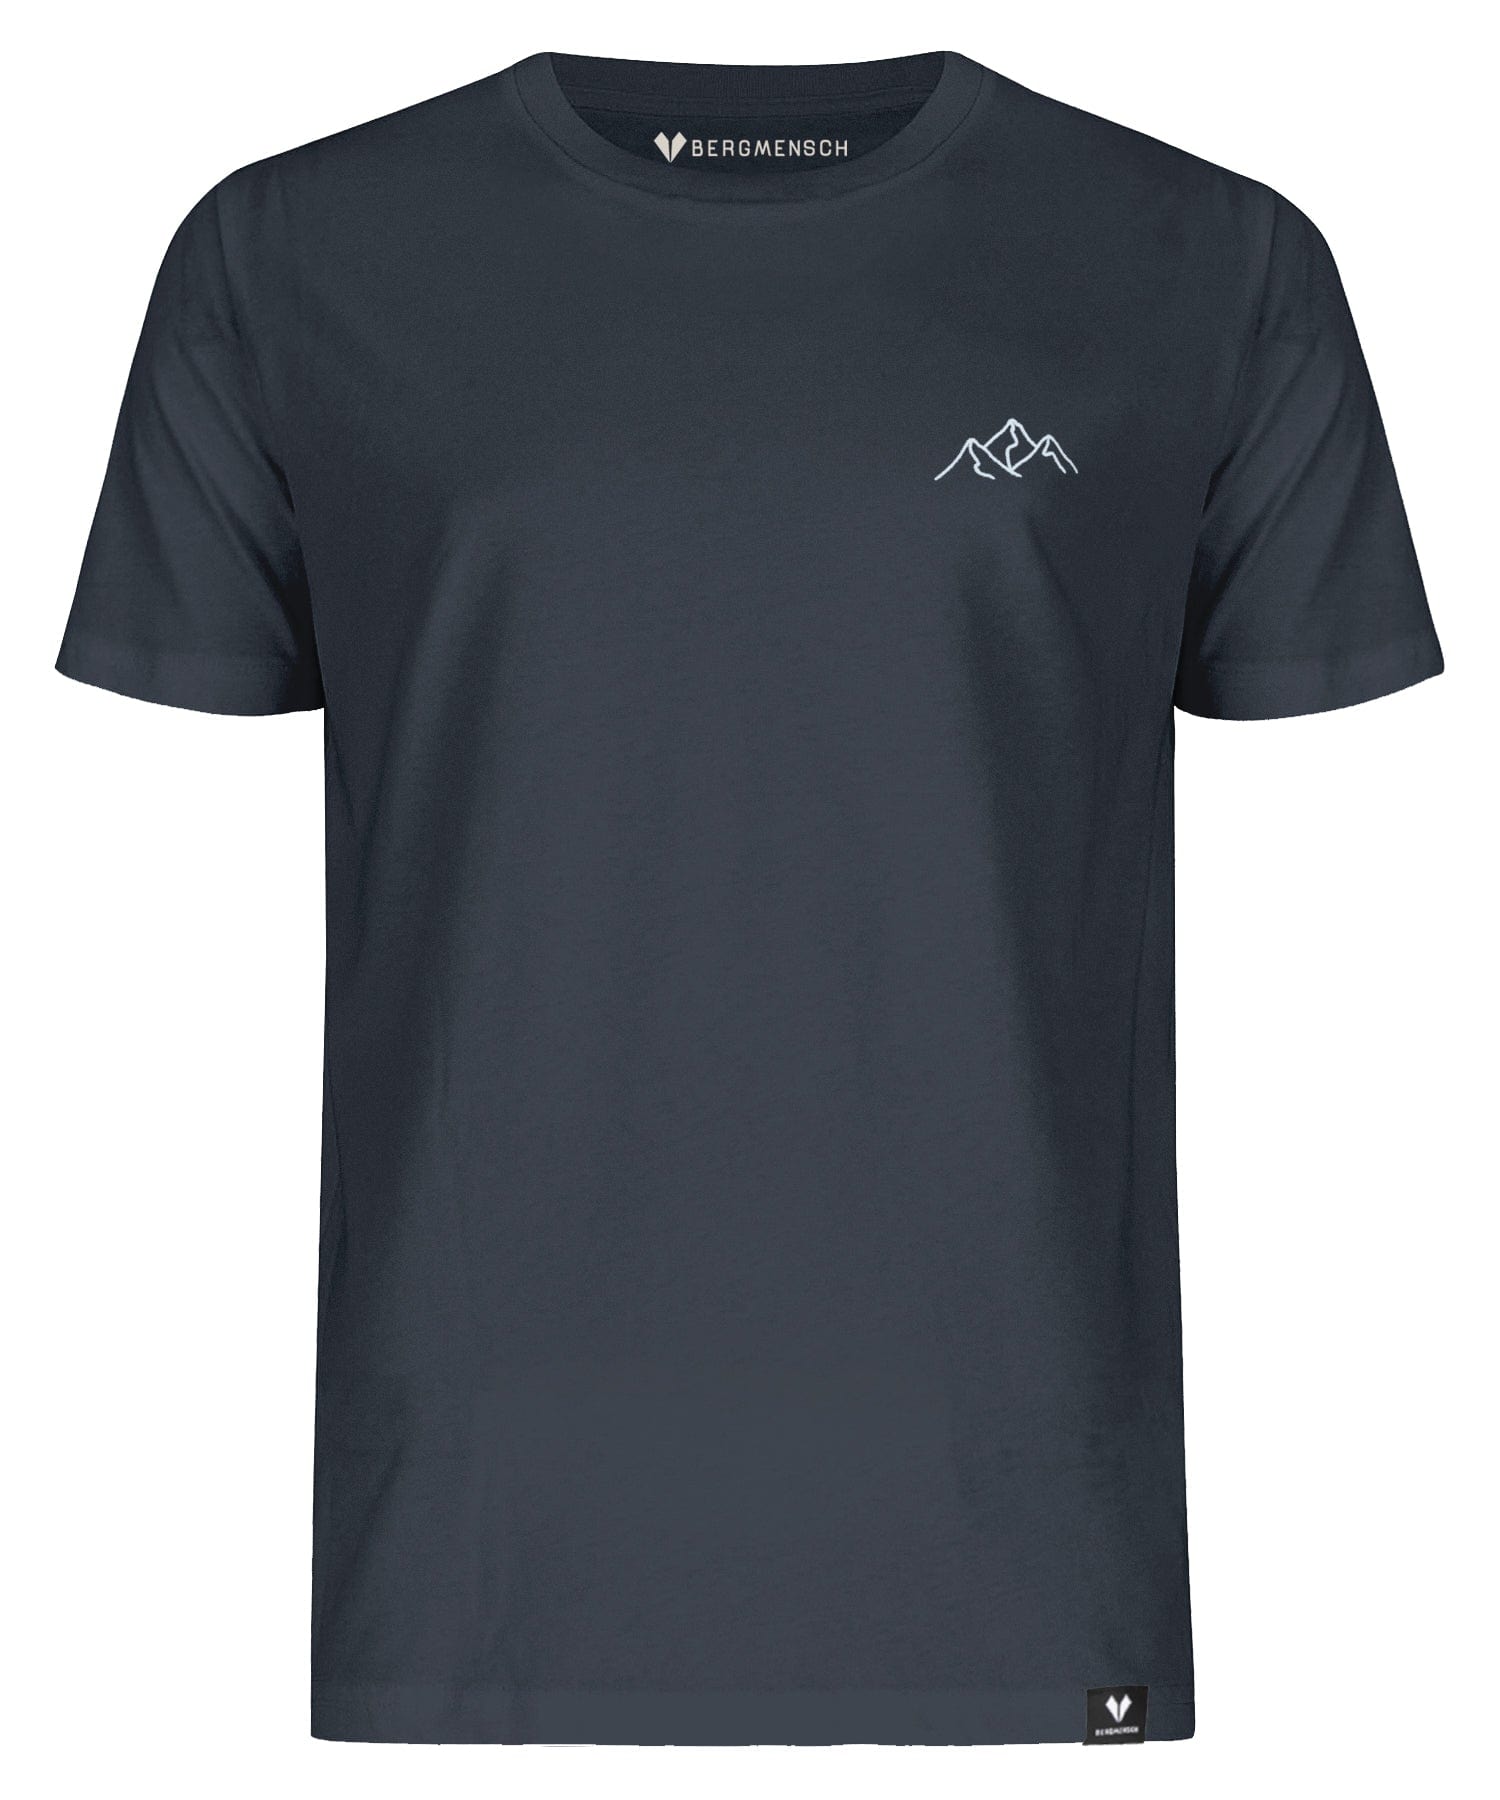 Bergsilhouette (Stick) - Unisex Premium Organic Shirt